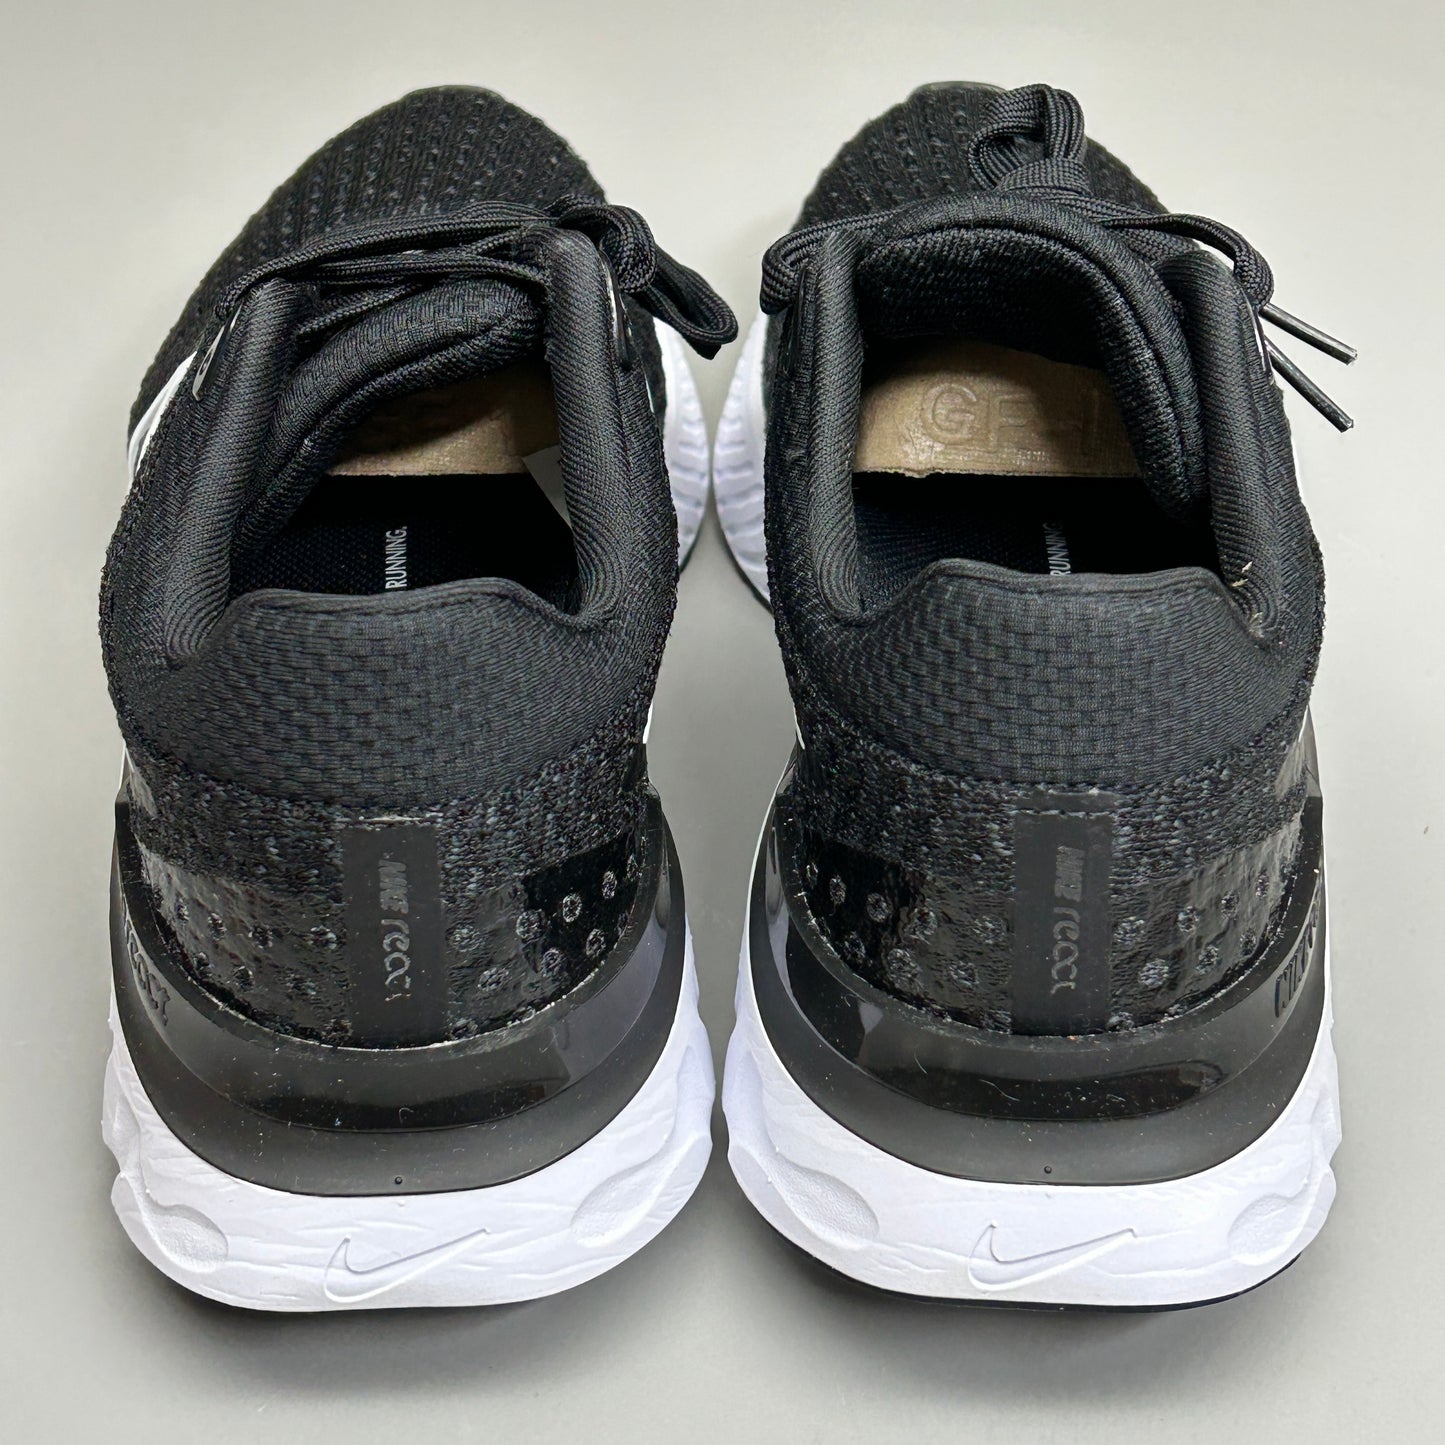 NIKE React Infinity 3 Women's Road Running Shoes Sz 9 Black DD3024-001 (New)